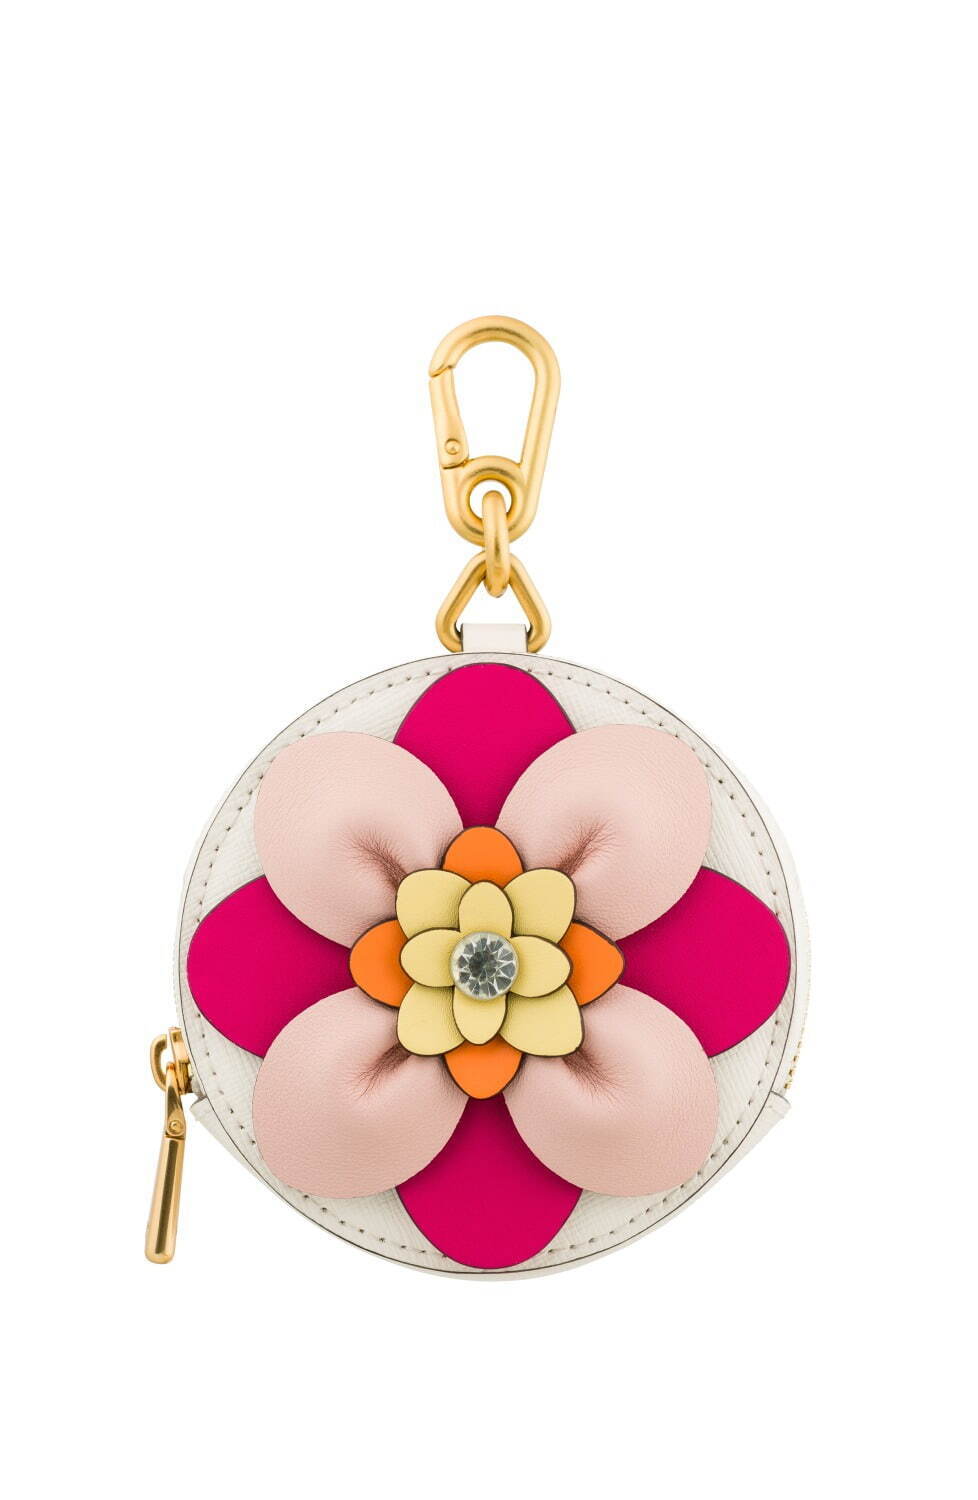 in bloom flower coin purse 17,600円